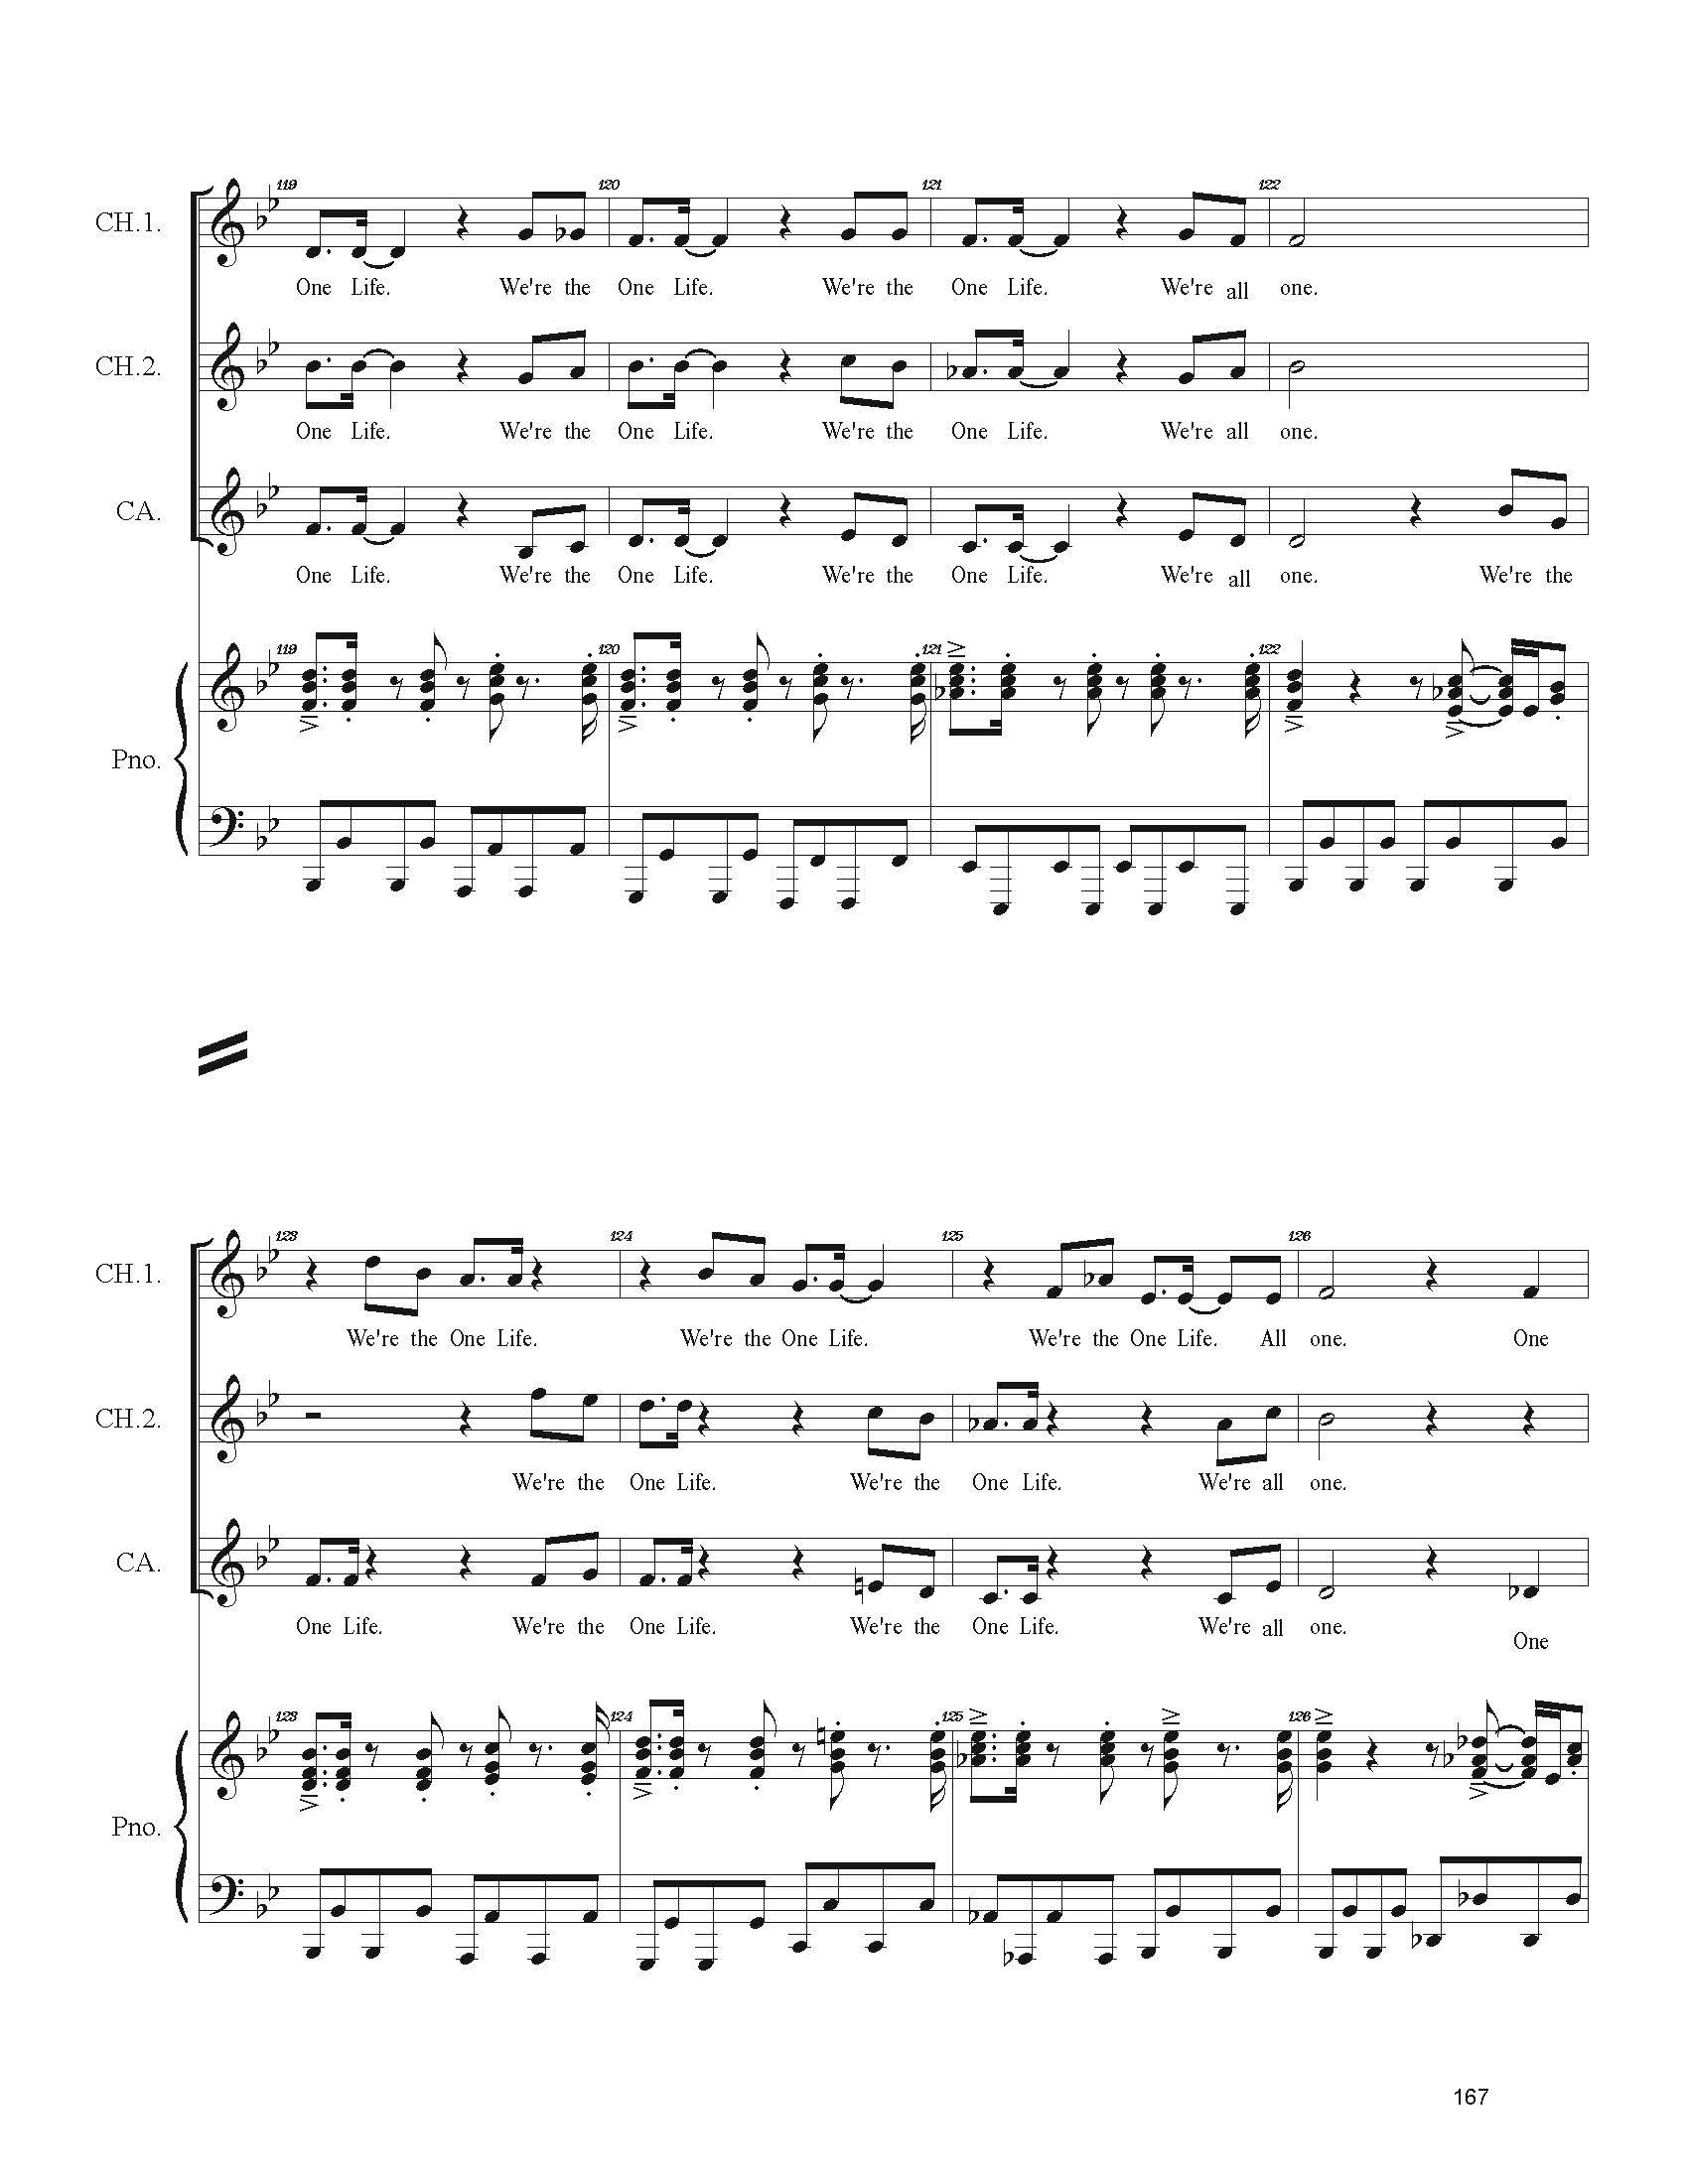 FULL PIANO VOCAL SCORE DRAFT 1 - Score_Page_167.jpg